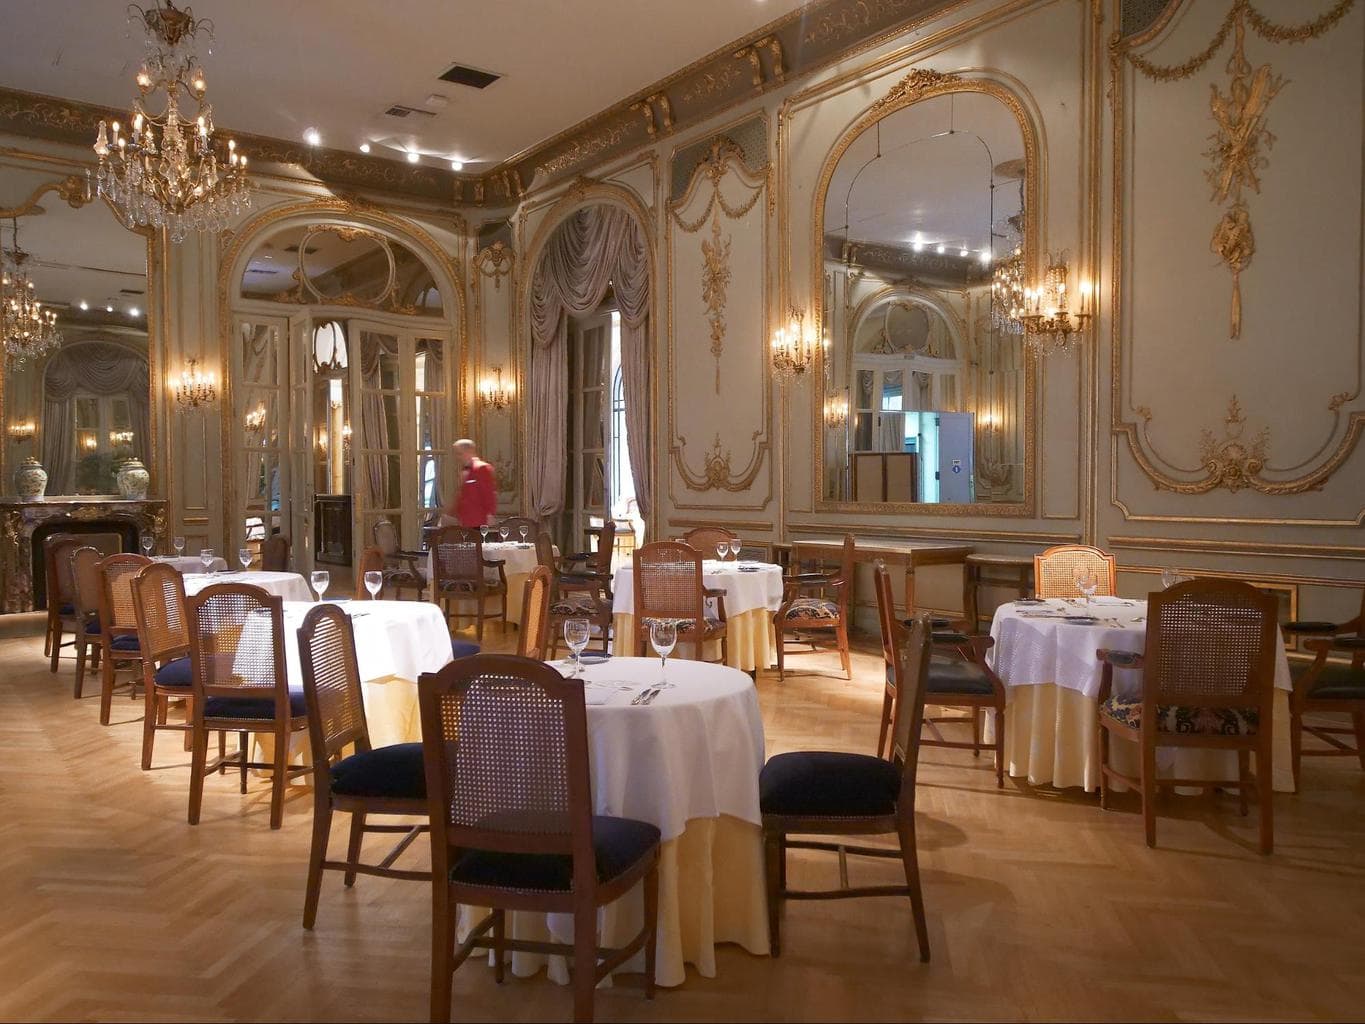 Alvear Palace dining